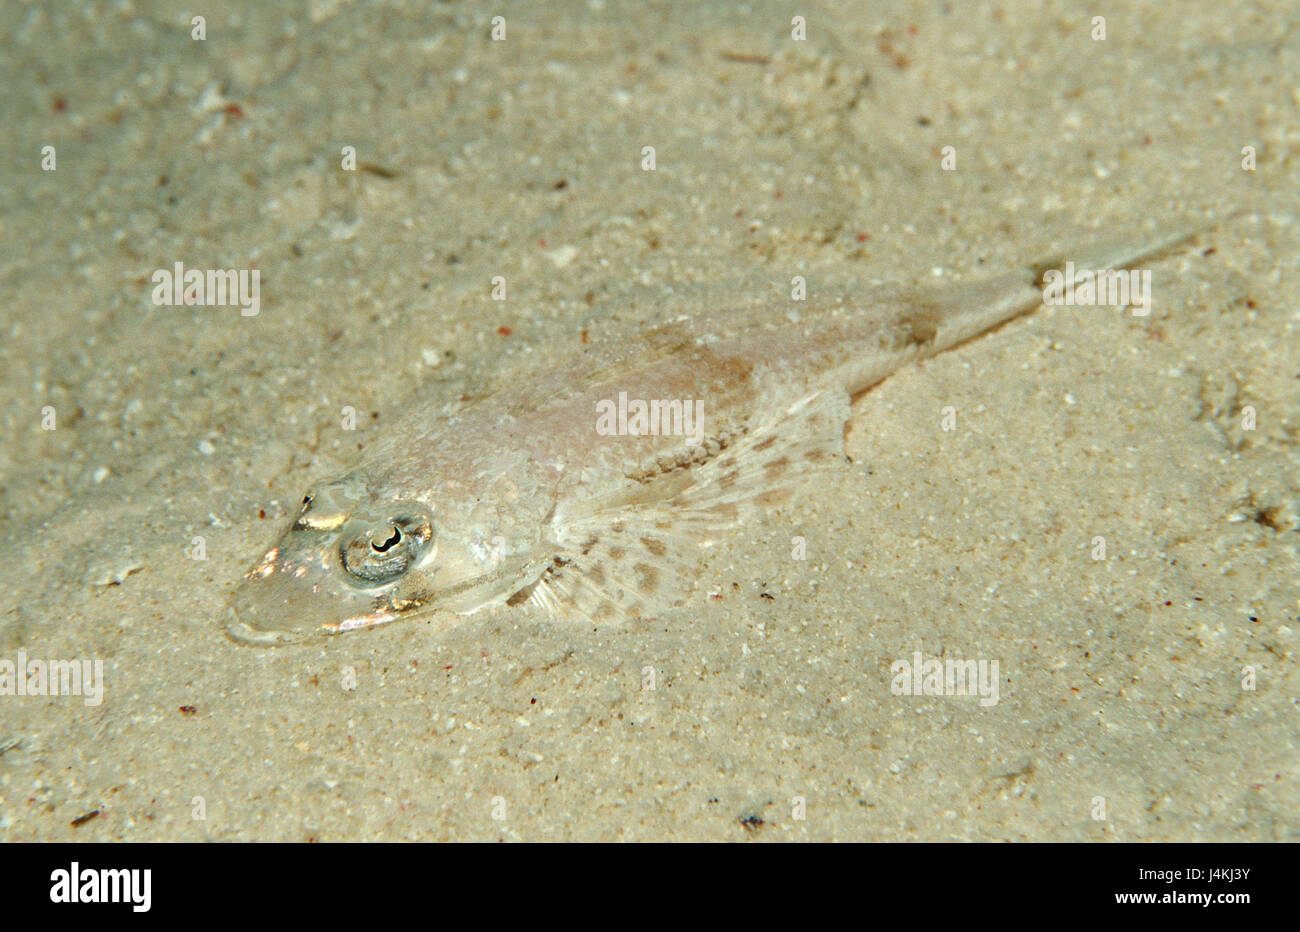 Joven enano de cabeza plana, cocodrilos, peces Thysanophrys chiltonae Foto de stock